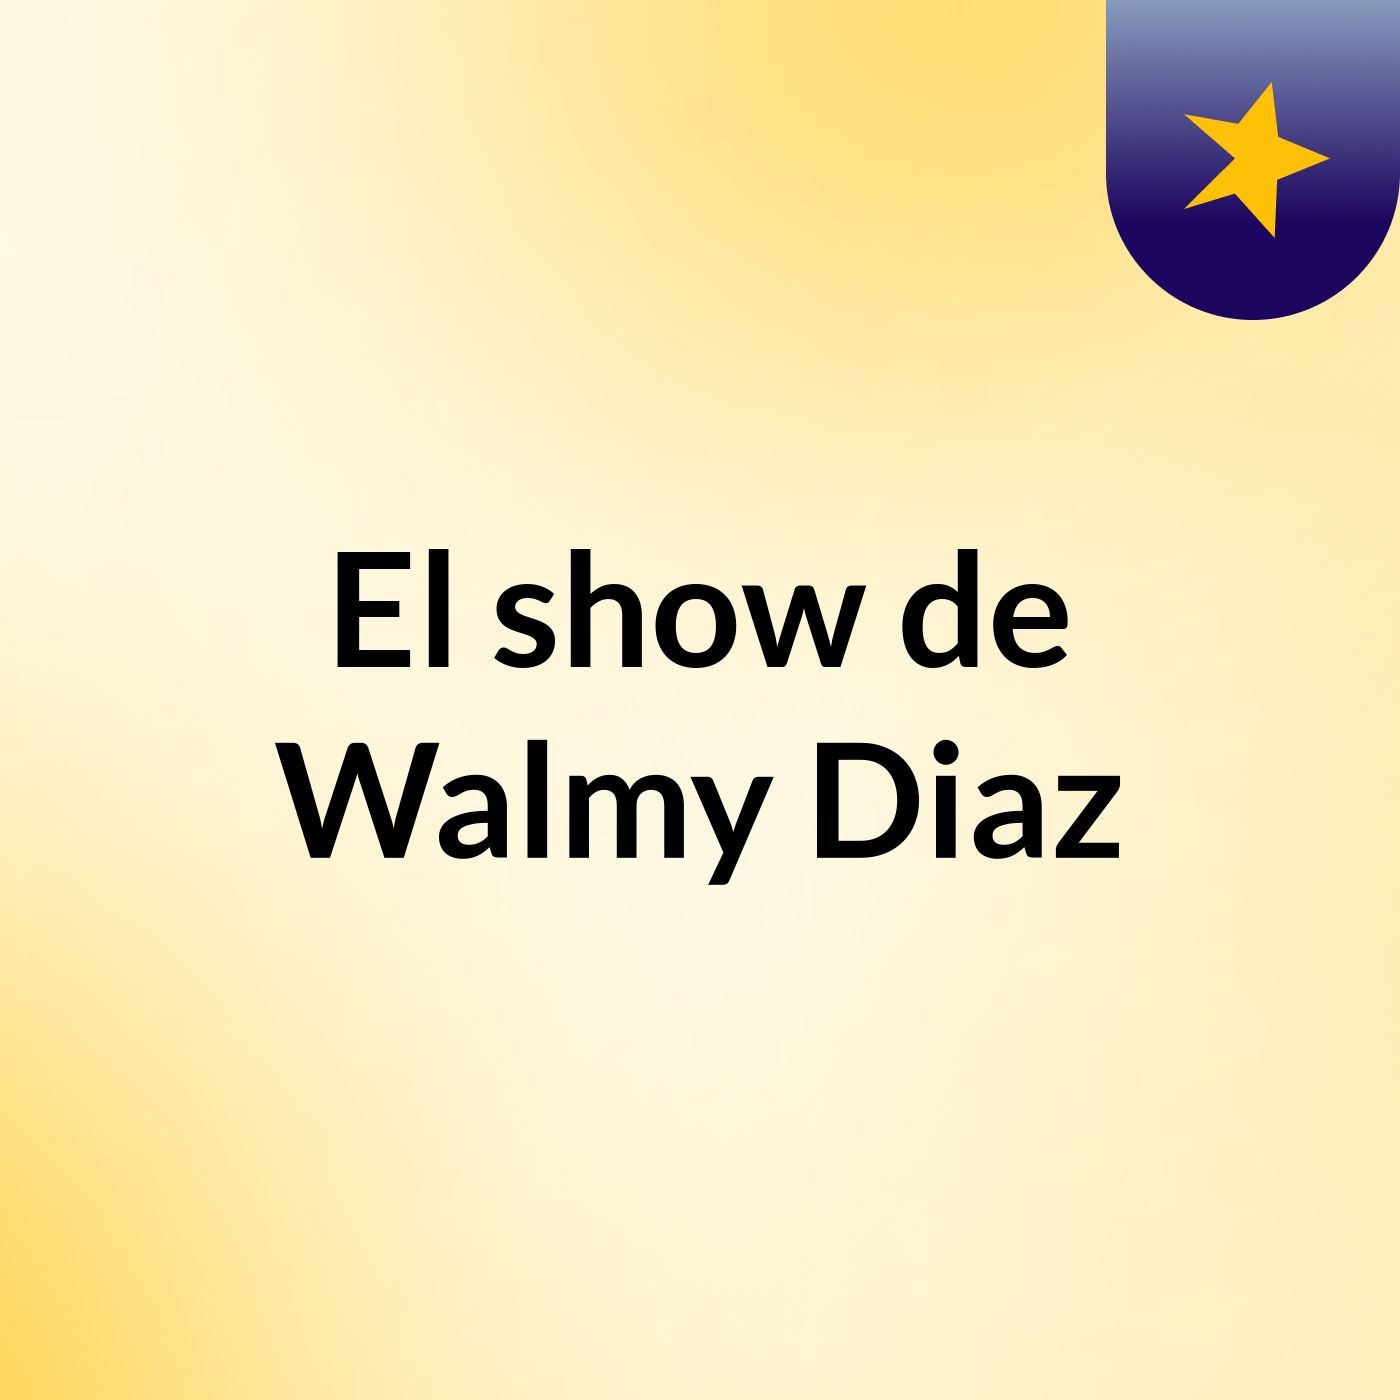 El show de Walmy Diaz